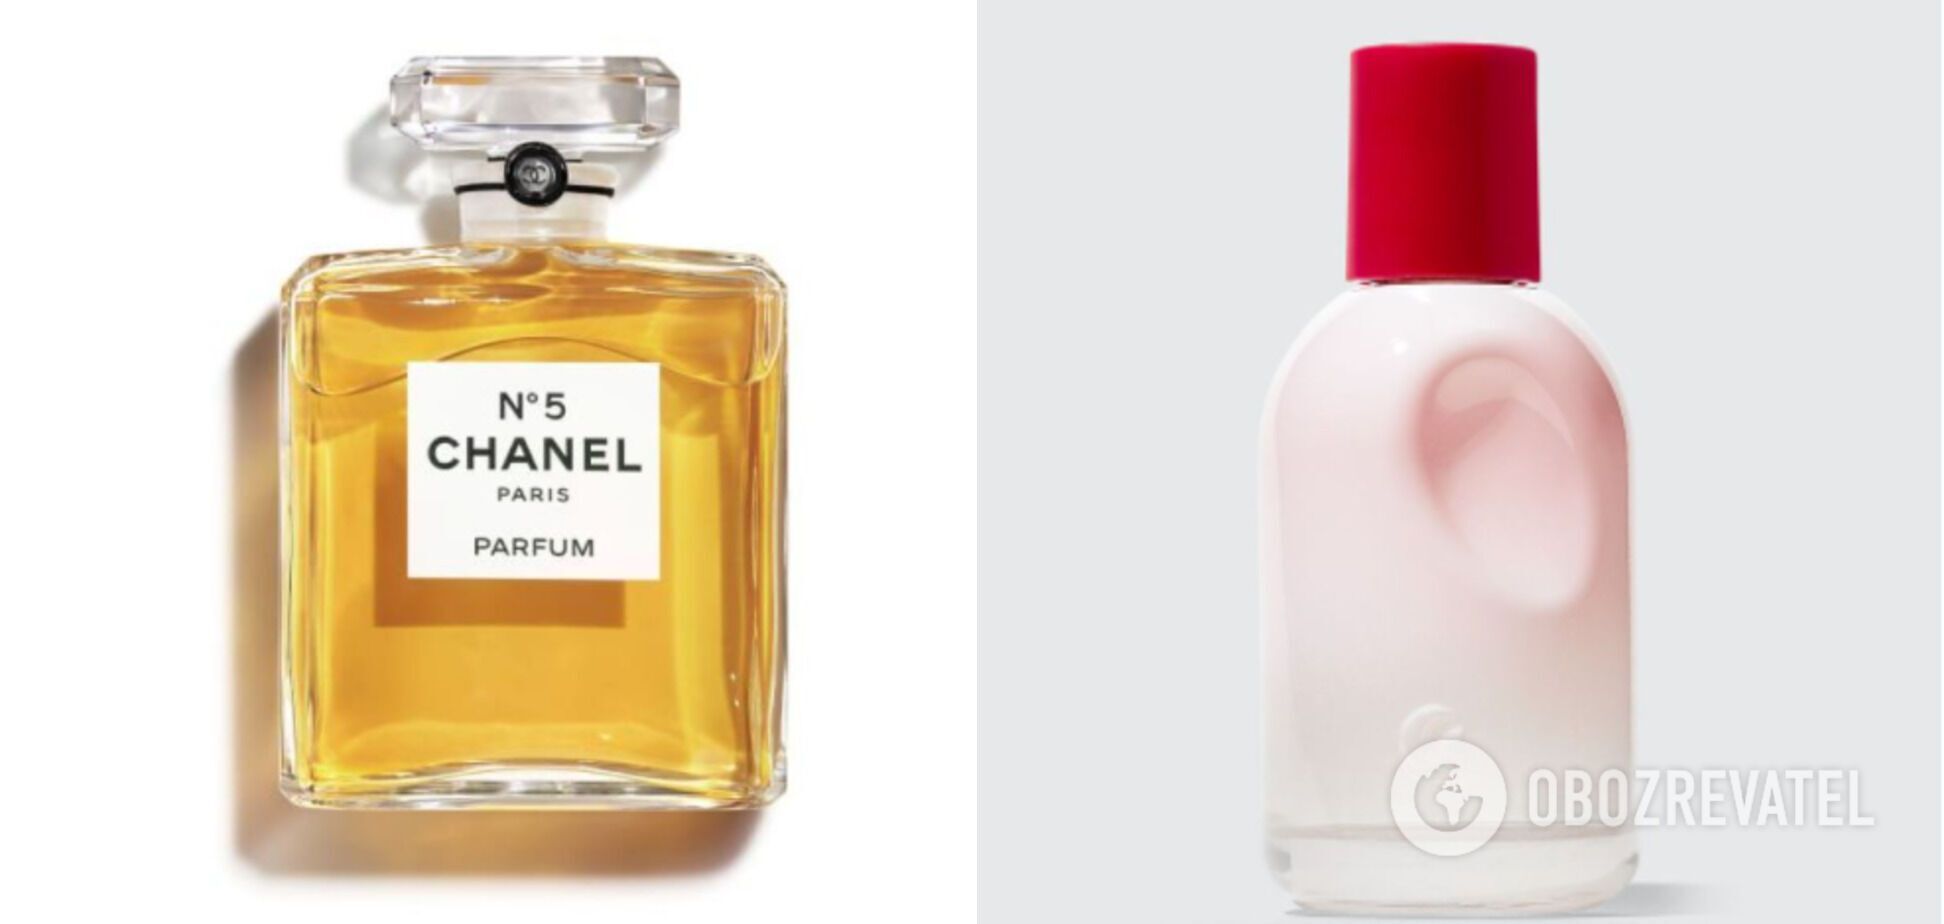 Chanel N°5 Eau de Parfum Spray and Glossier You